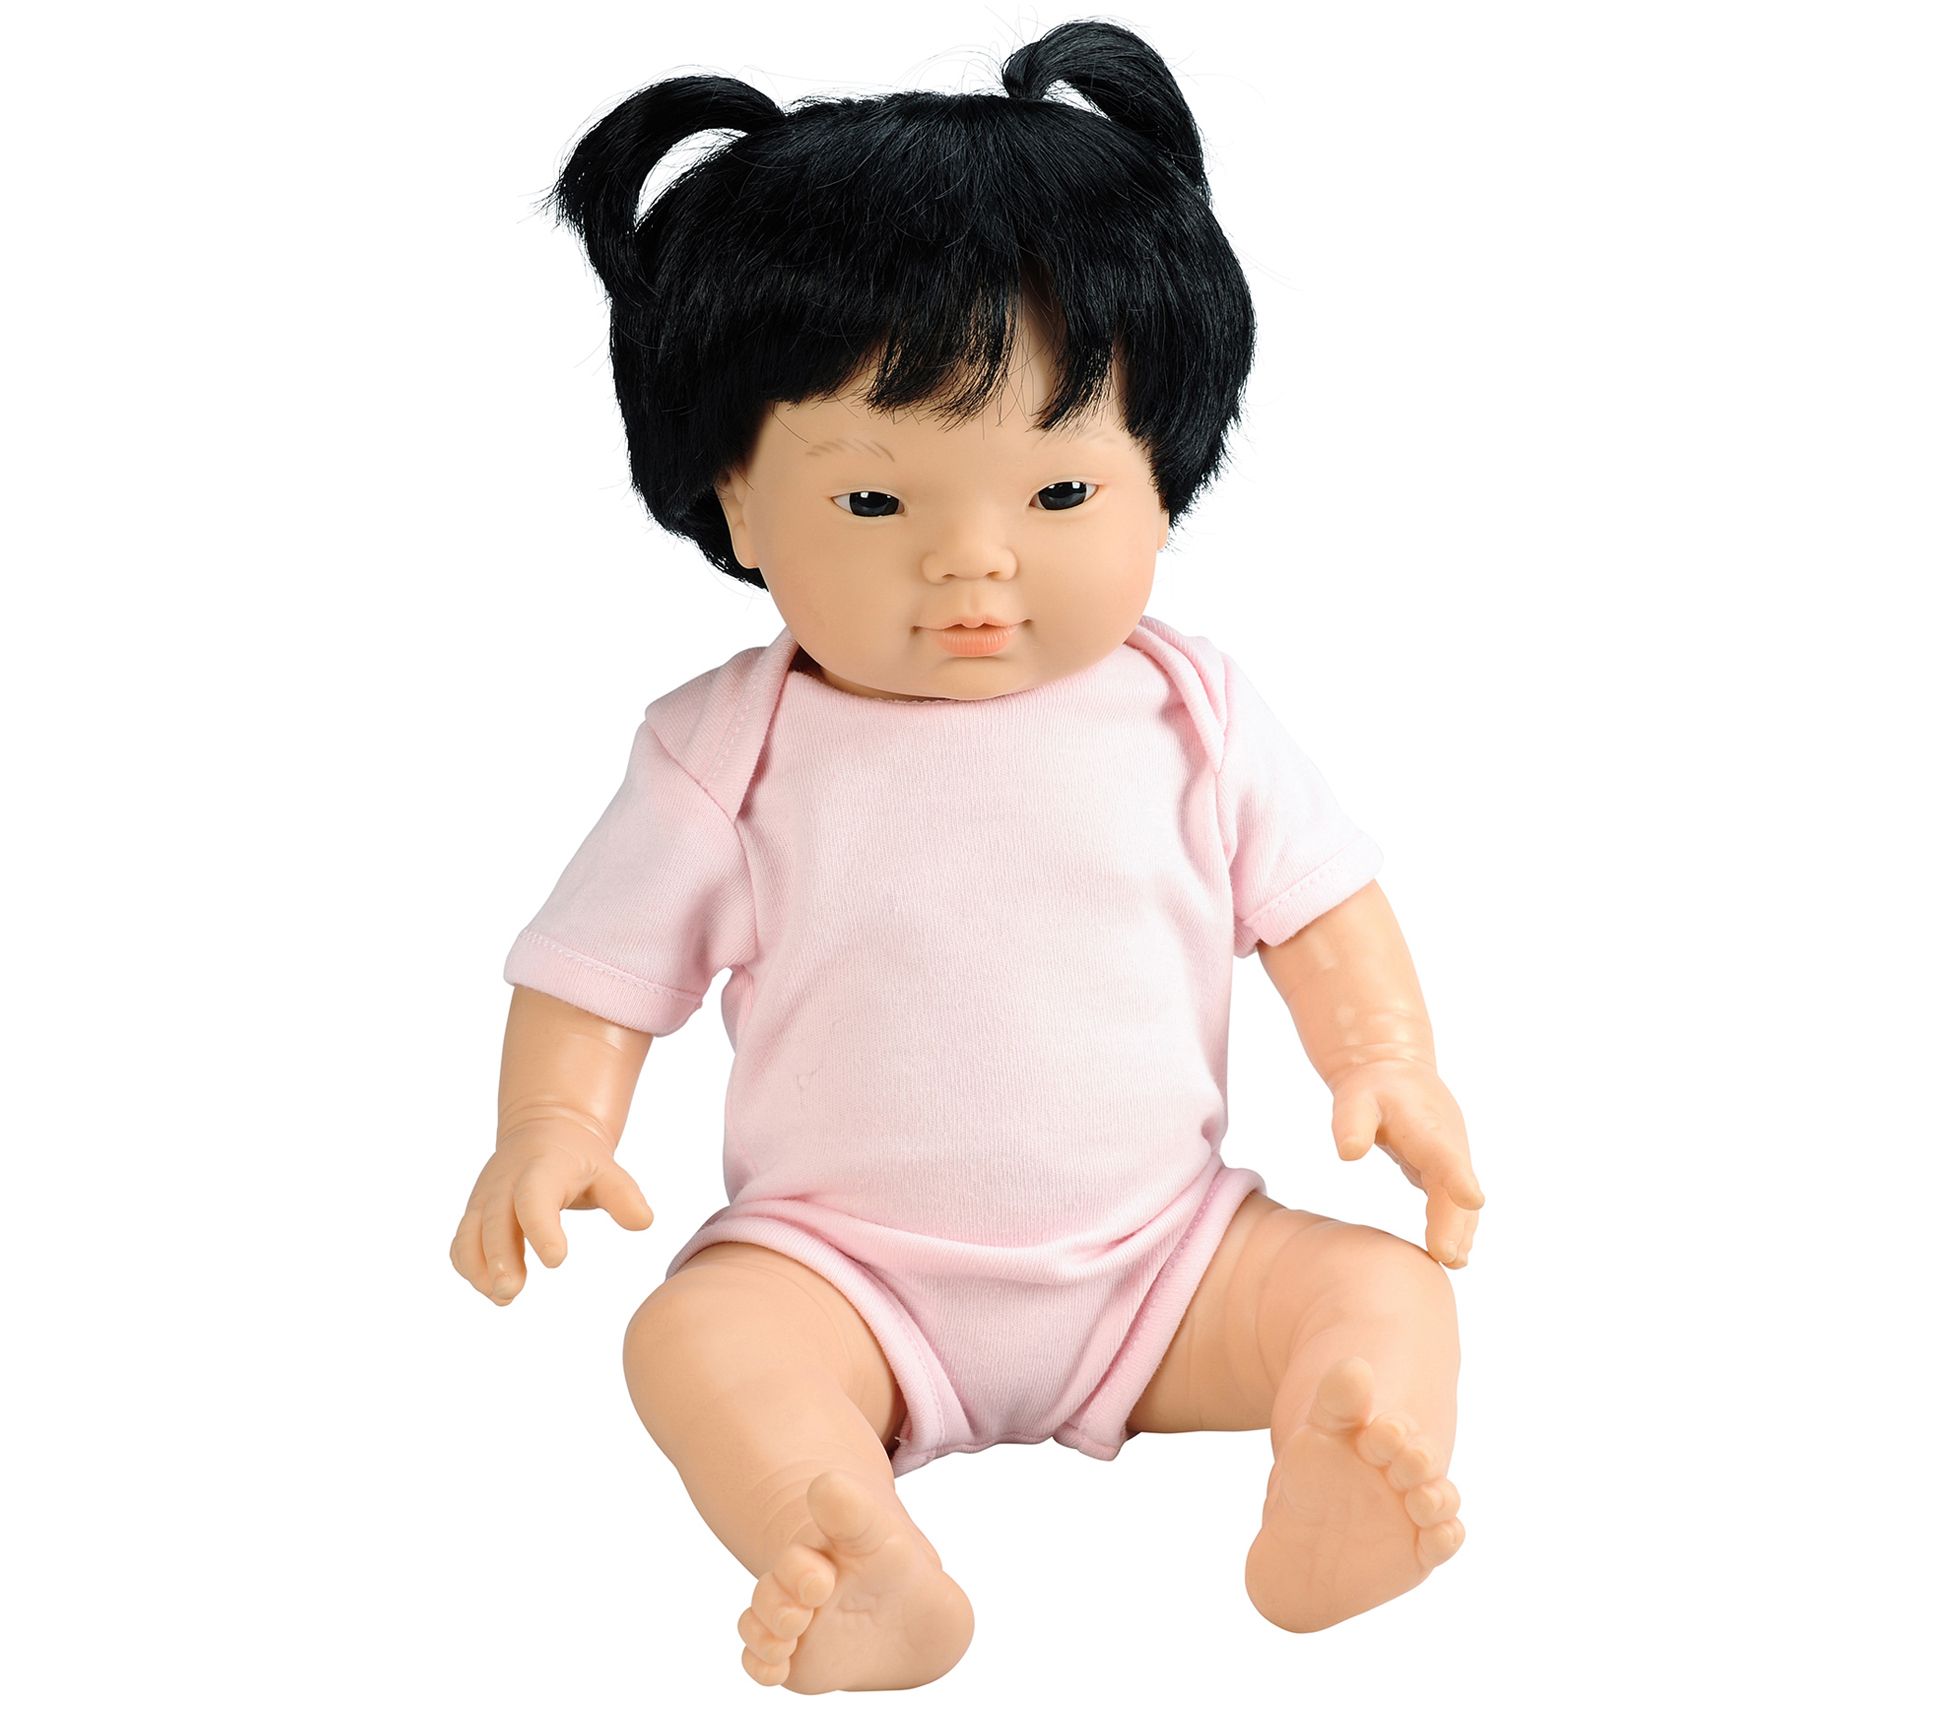 qvc dolls for sale